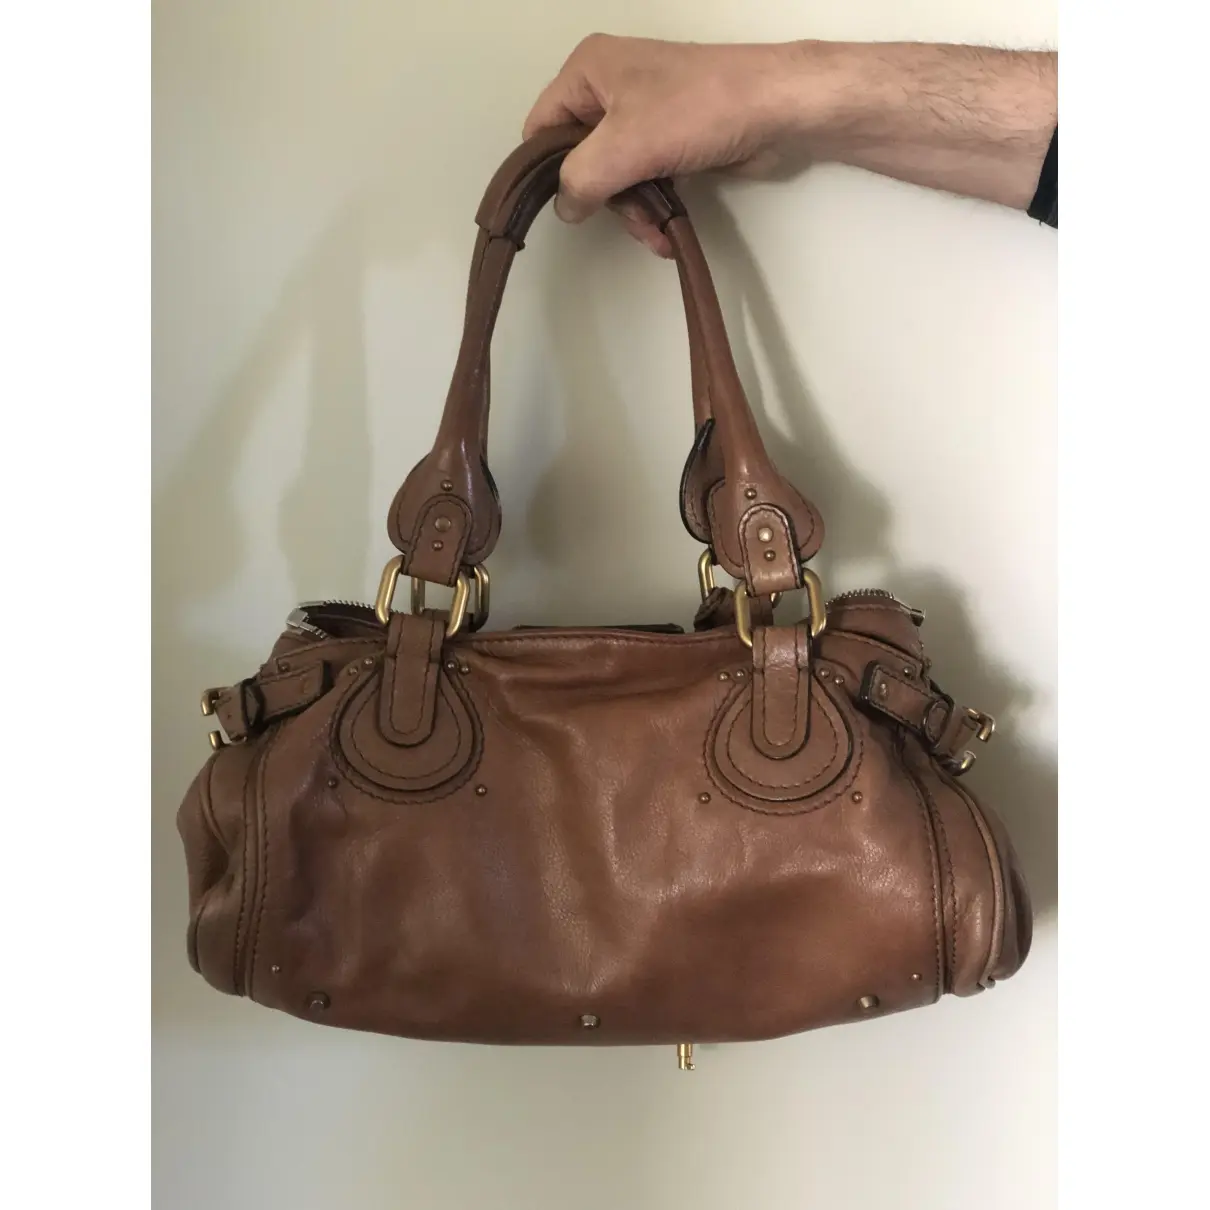 Chloé Paddington leather handbag for sale - Vintage